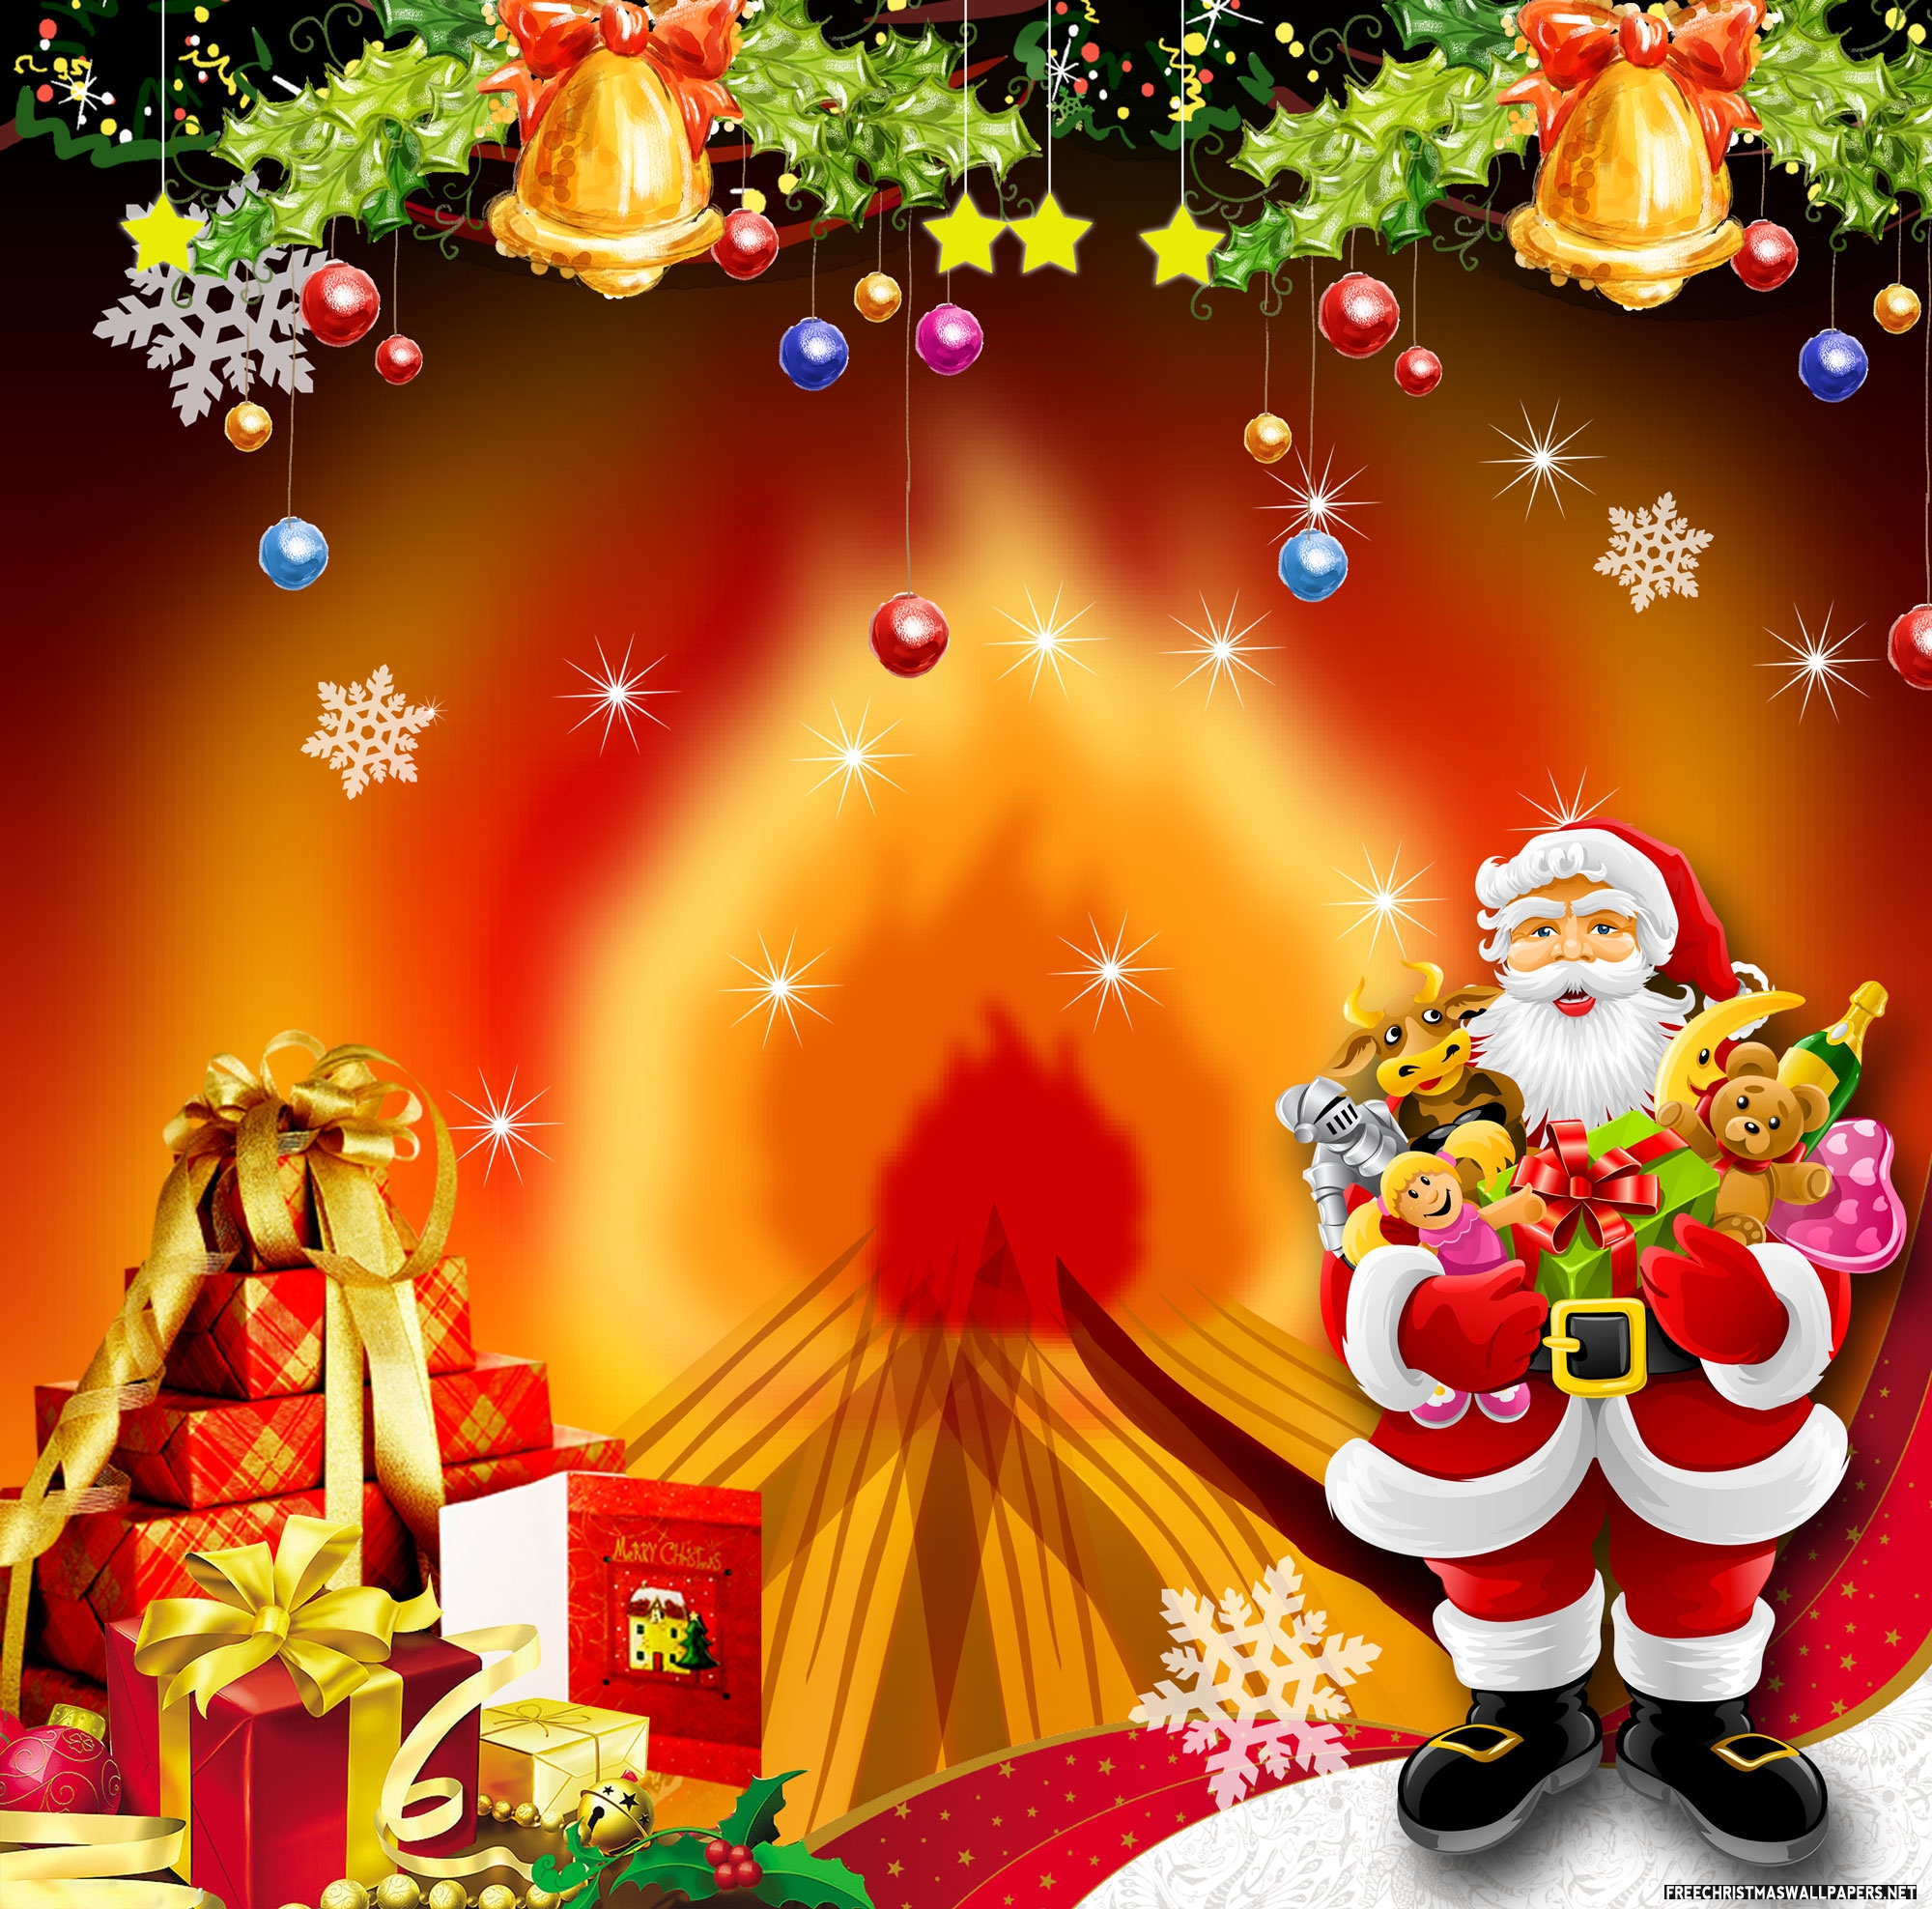 5 Beautiful Christmas Cards 2011 | Free Christmas Wallpapers Blog